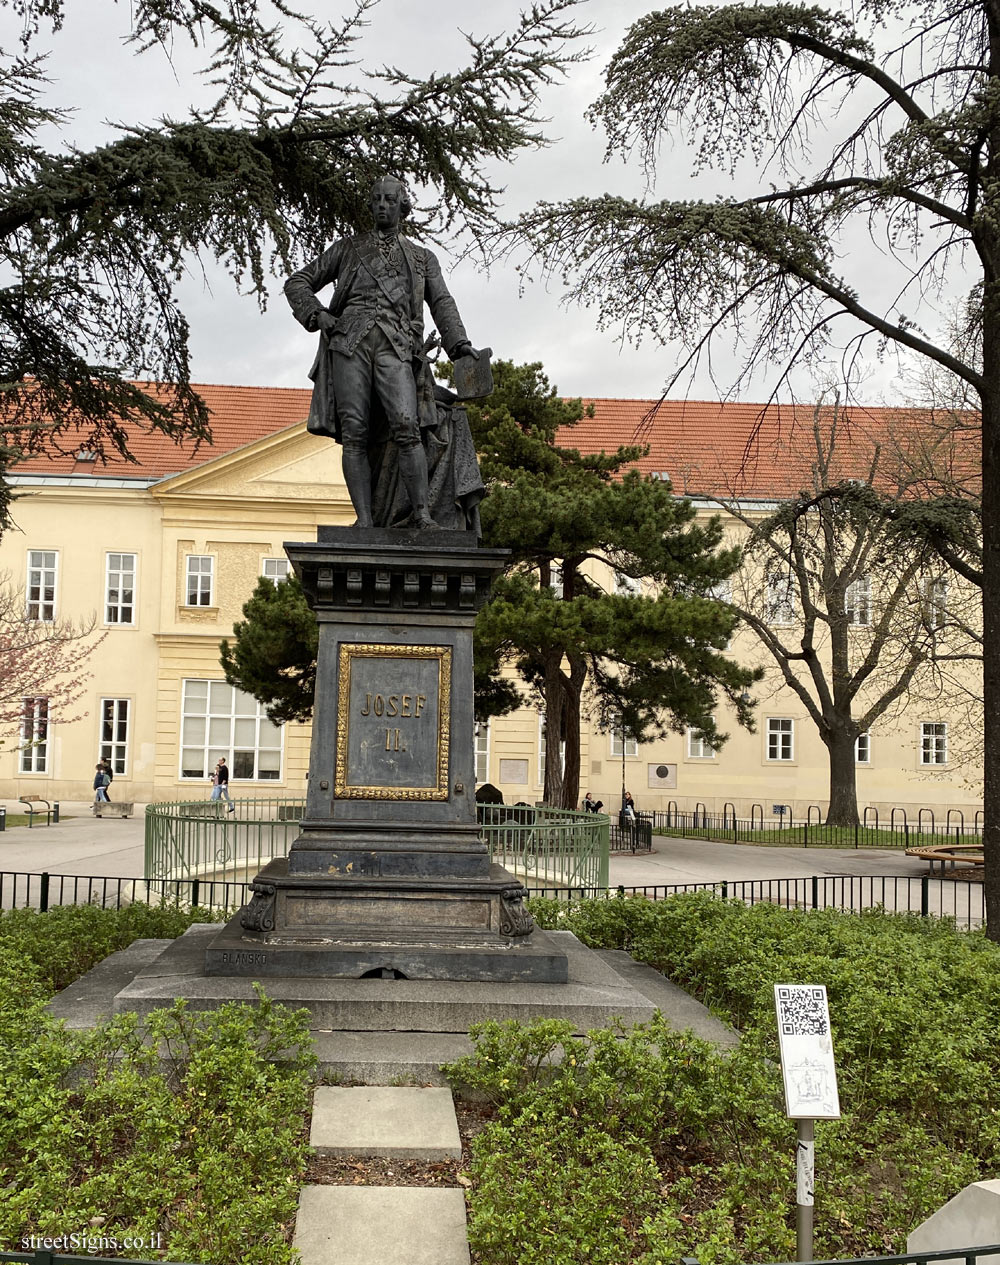 Vienna - A monument to Joseph II, Holy Roman Emperor - Spitalgasse 2, 1090 Wien, Austria